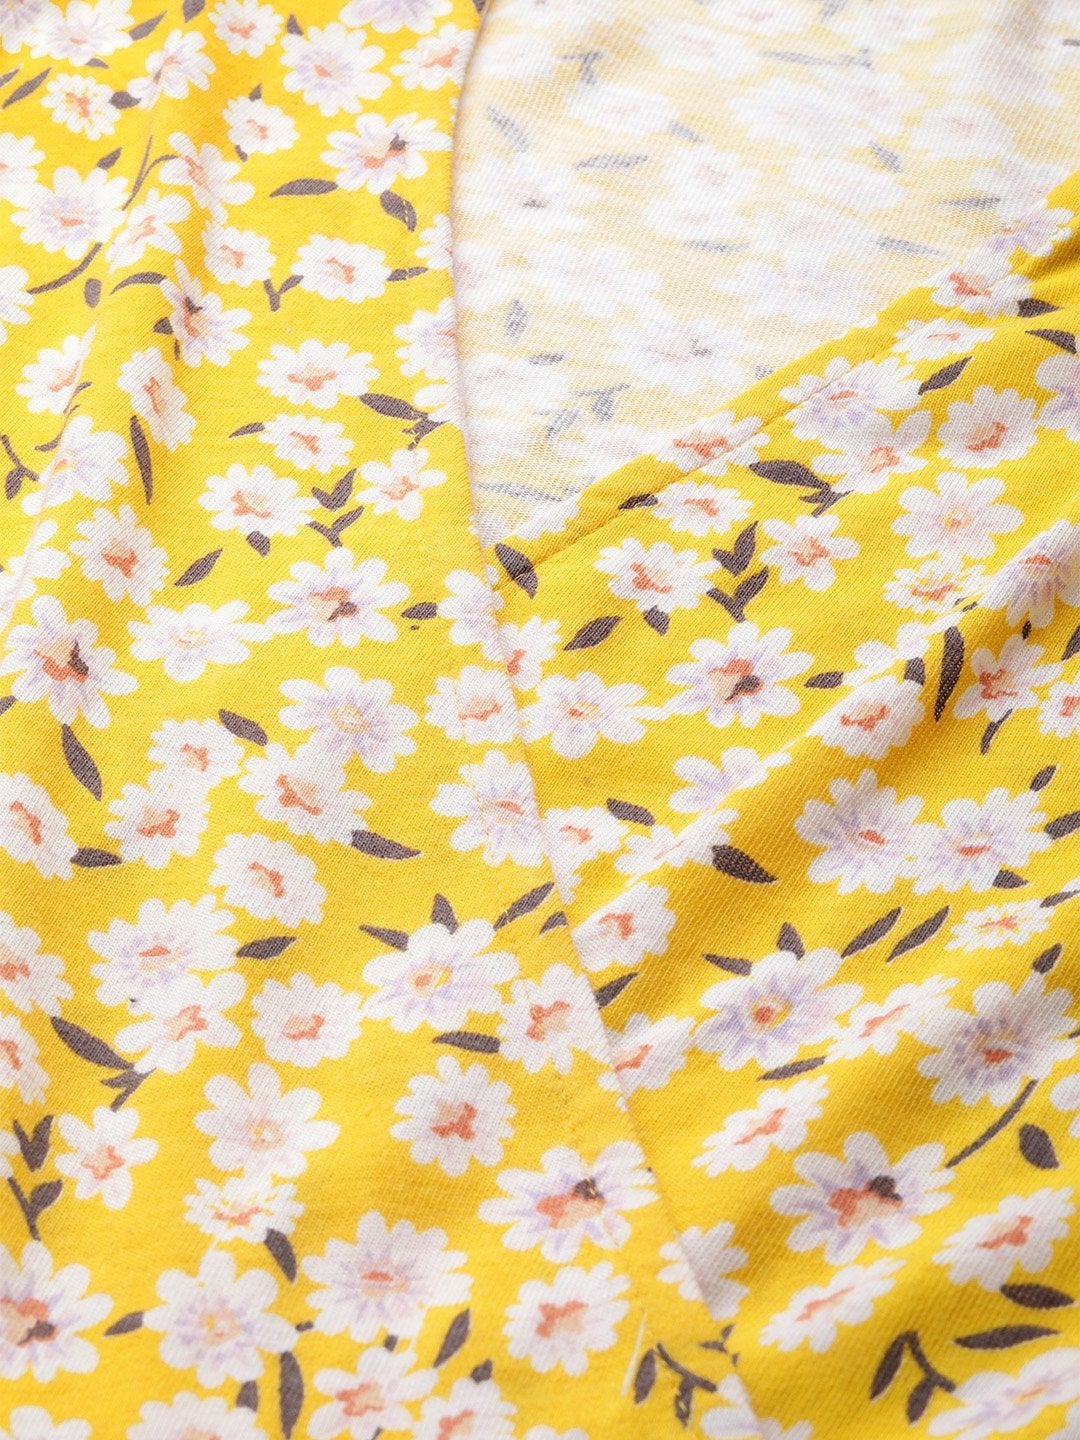 Women's Yellow Ditsy Floral Wrap Skater Dress - SASSAFRAS